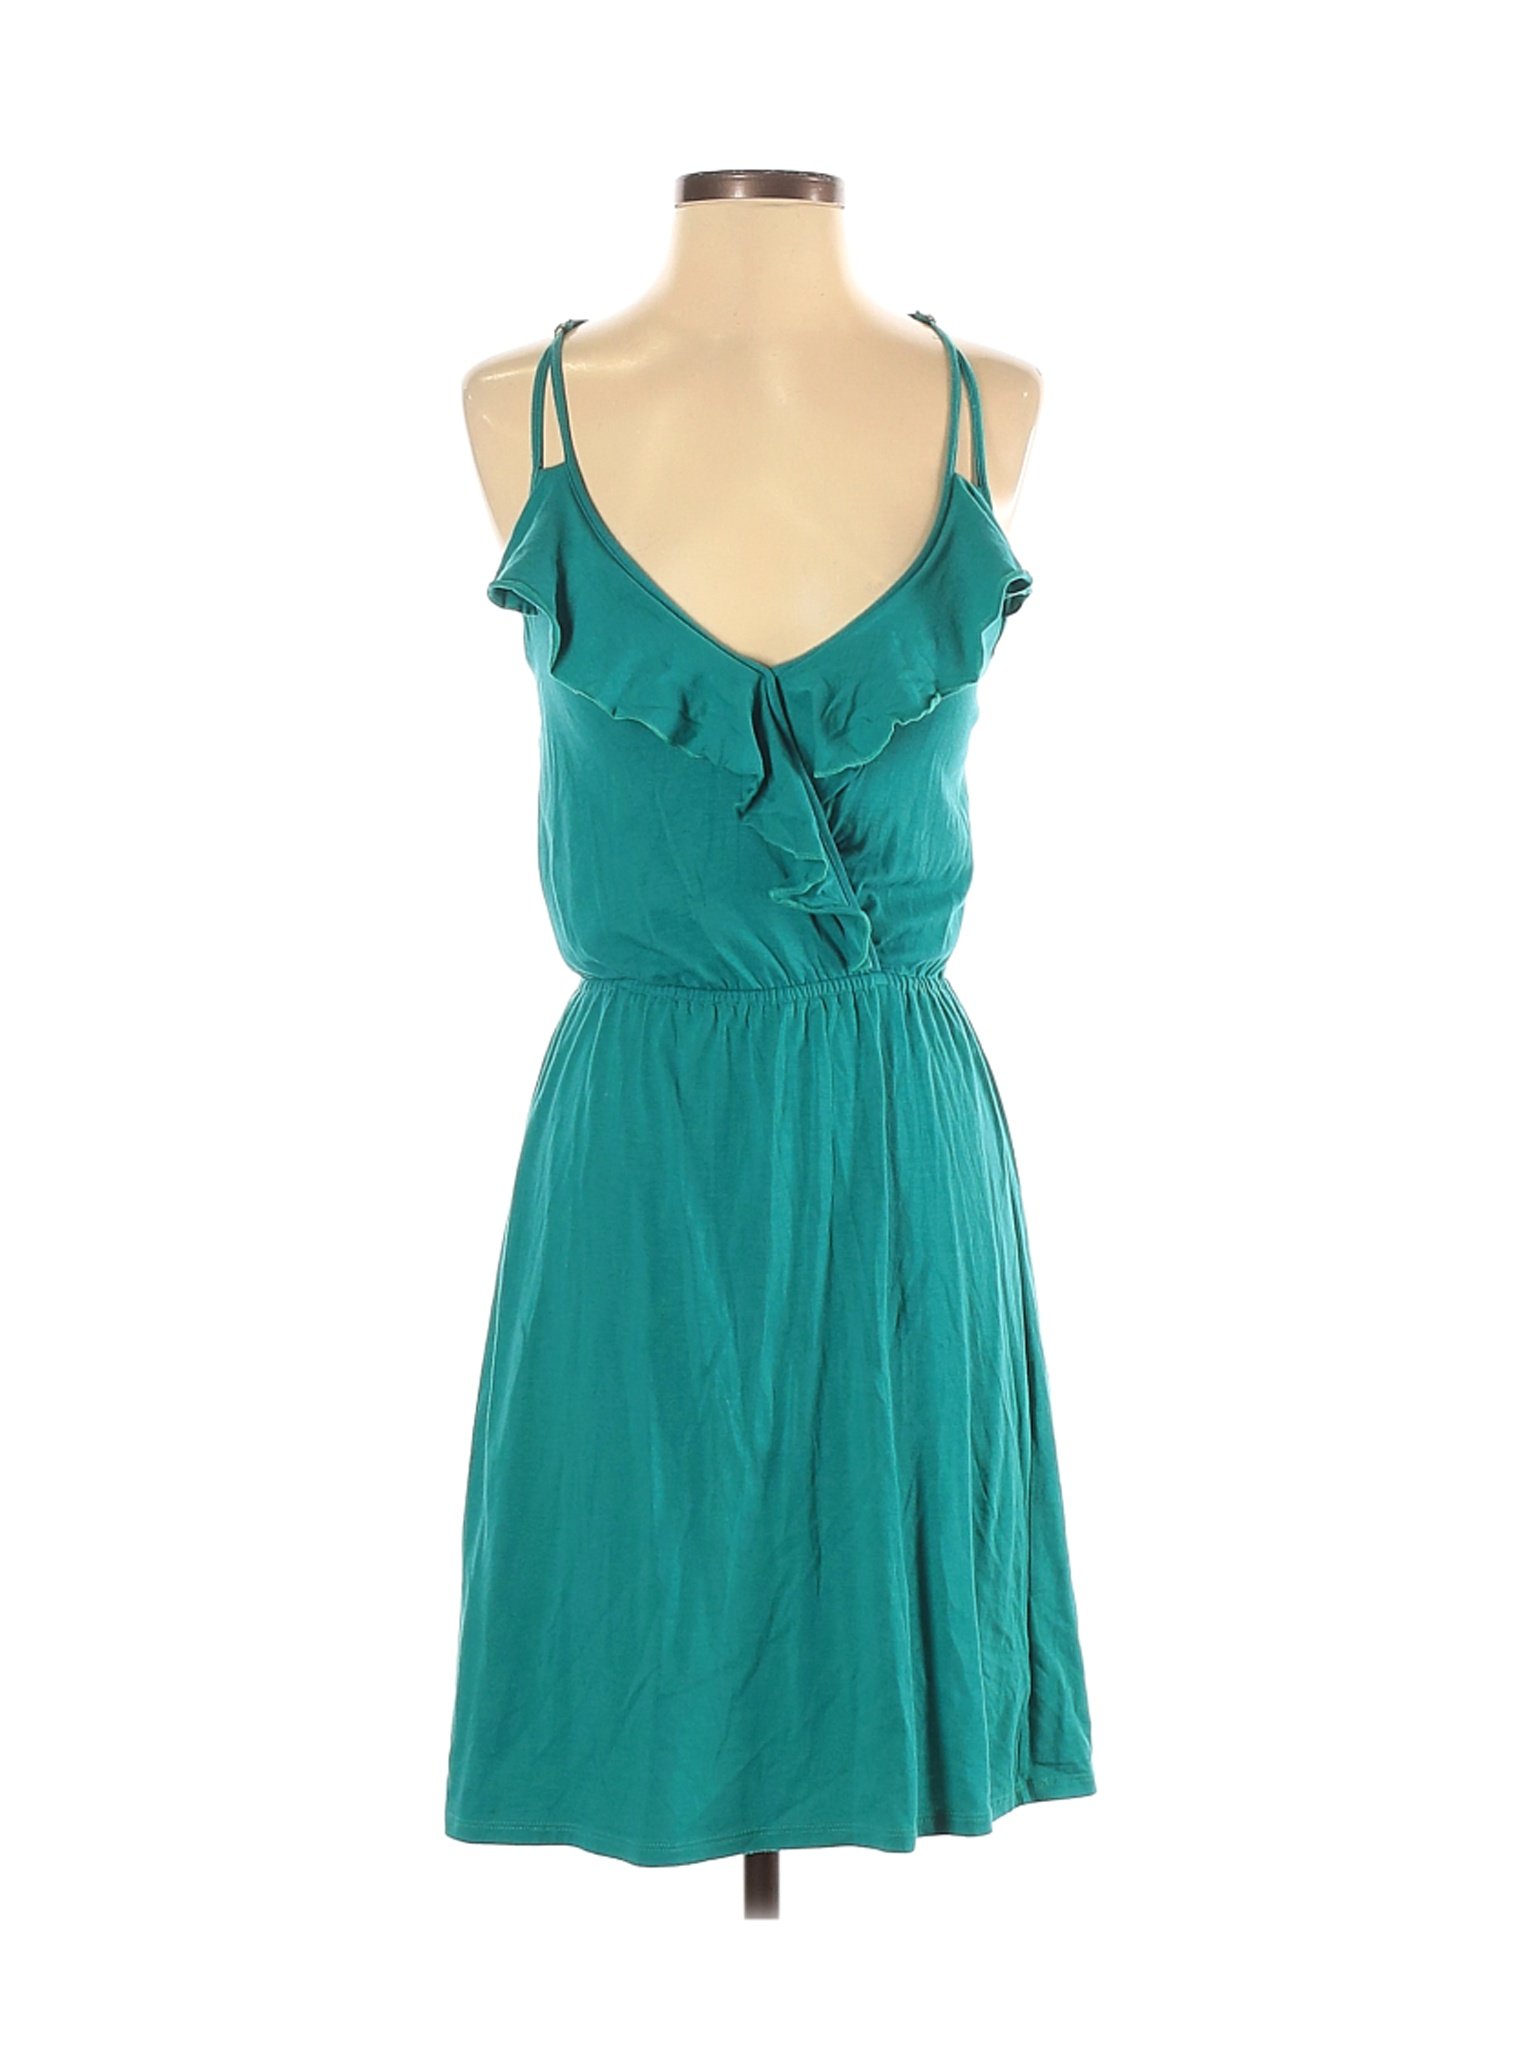 Victoria's Secret Women Green Casual Dress S | eBay